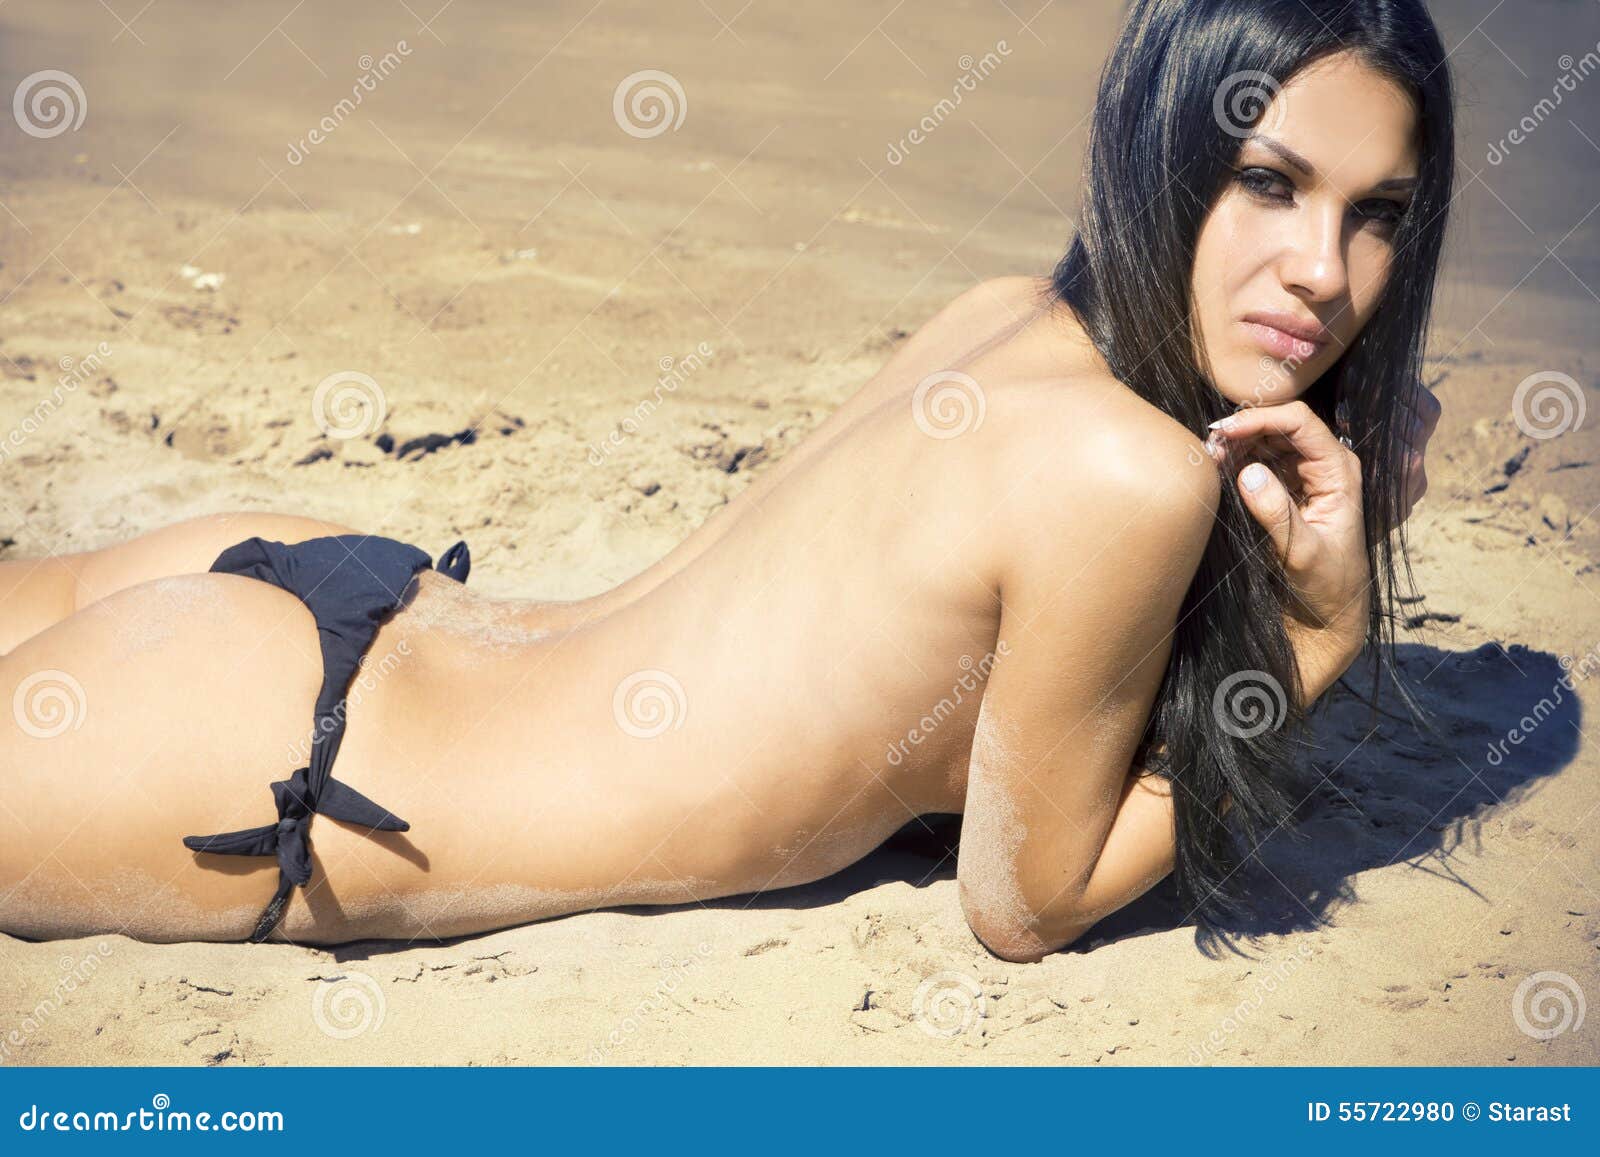 Cosmopolitan Sexy Pictures Desnudo Female Sunbathing